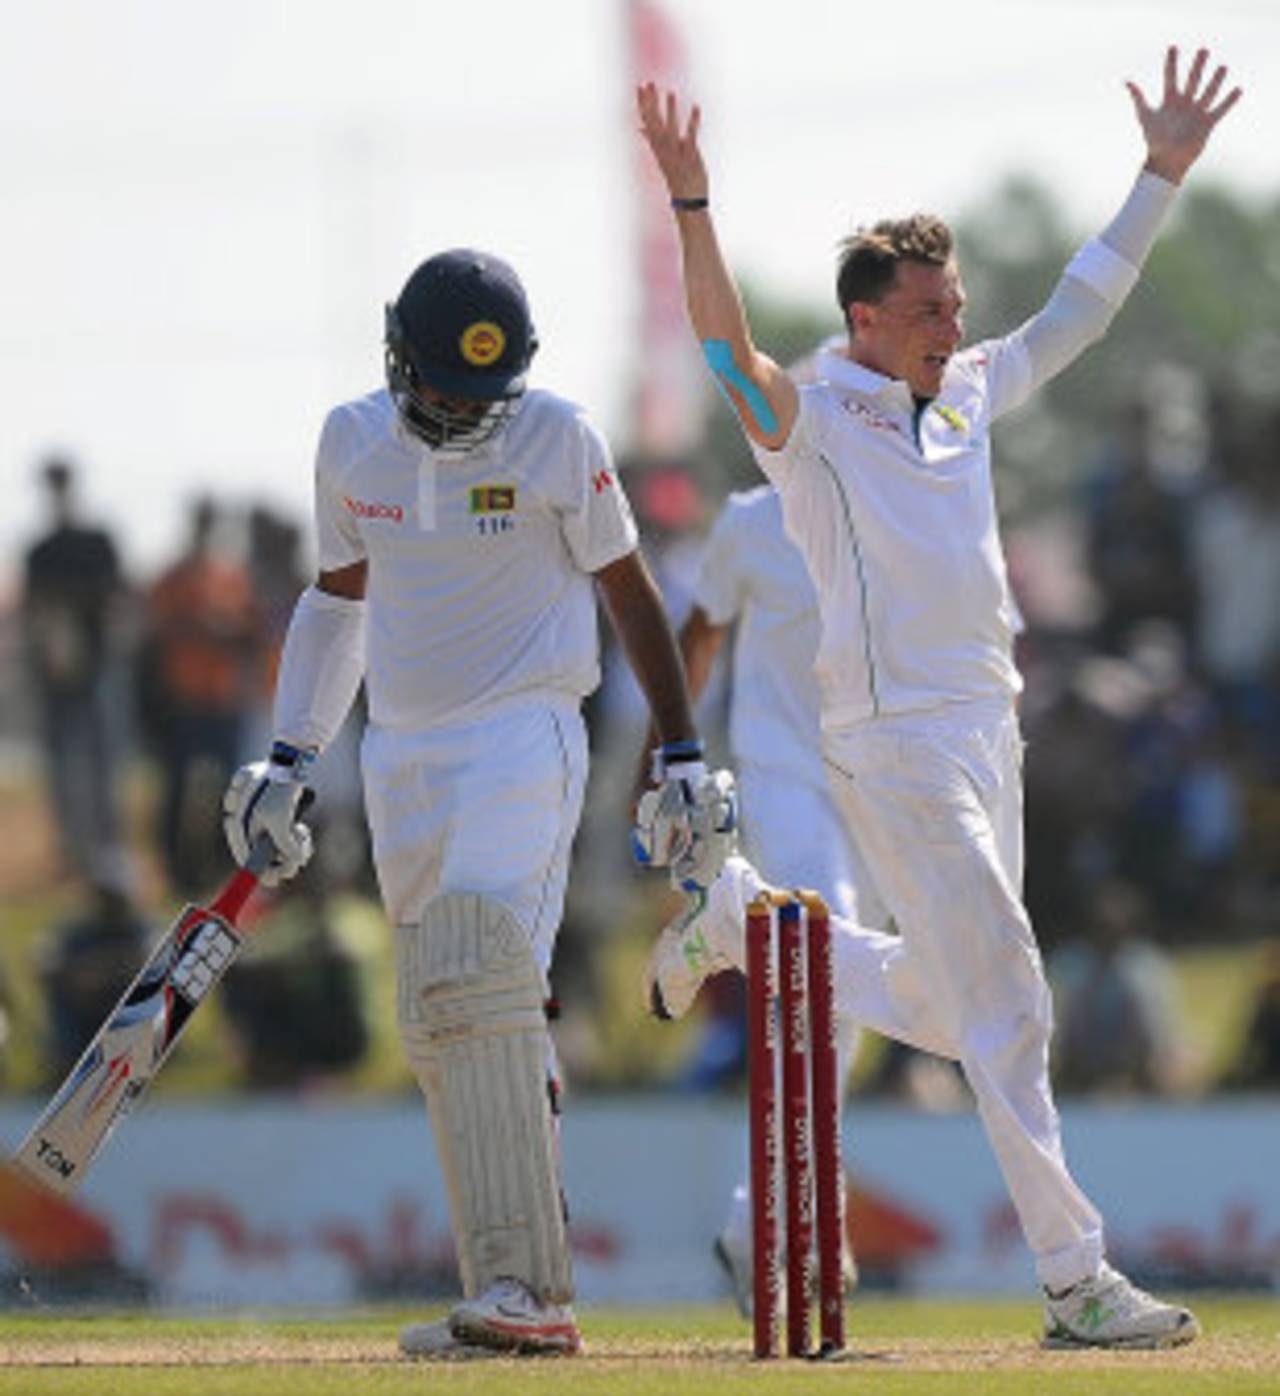 Dale Steyn celebrates after getting rid of Lahiru Thirimanne, Sri Lanka v South Africa, 1st Test, Galle, 3rd day, July 18, 2014